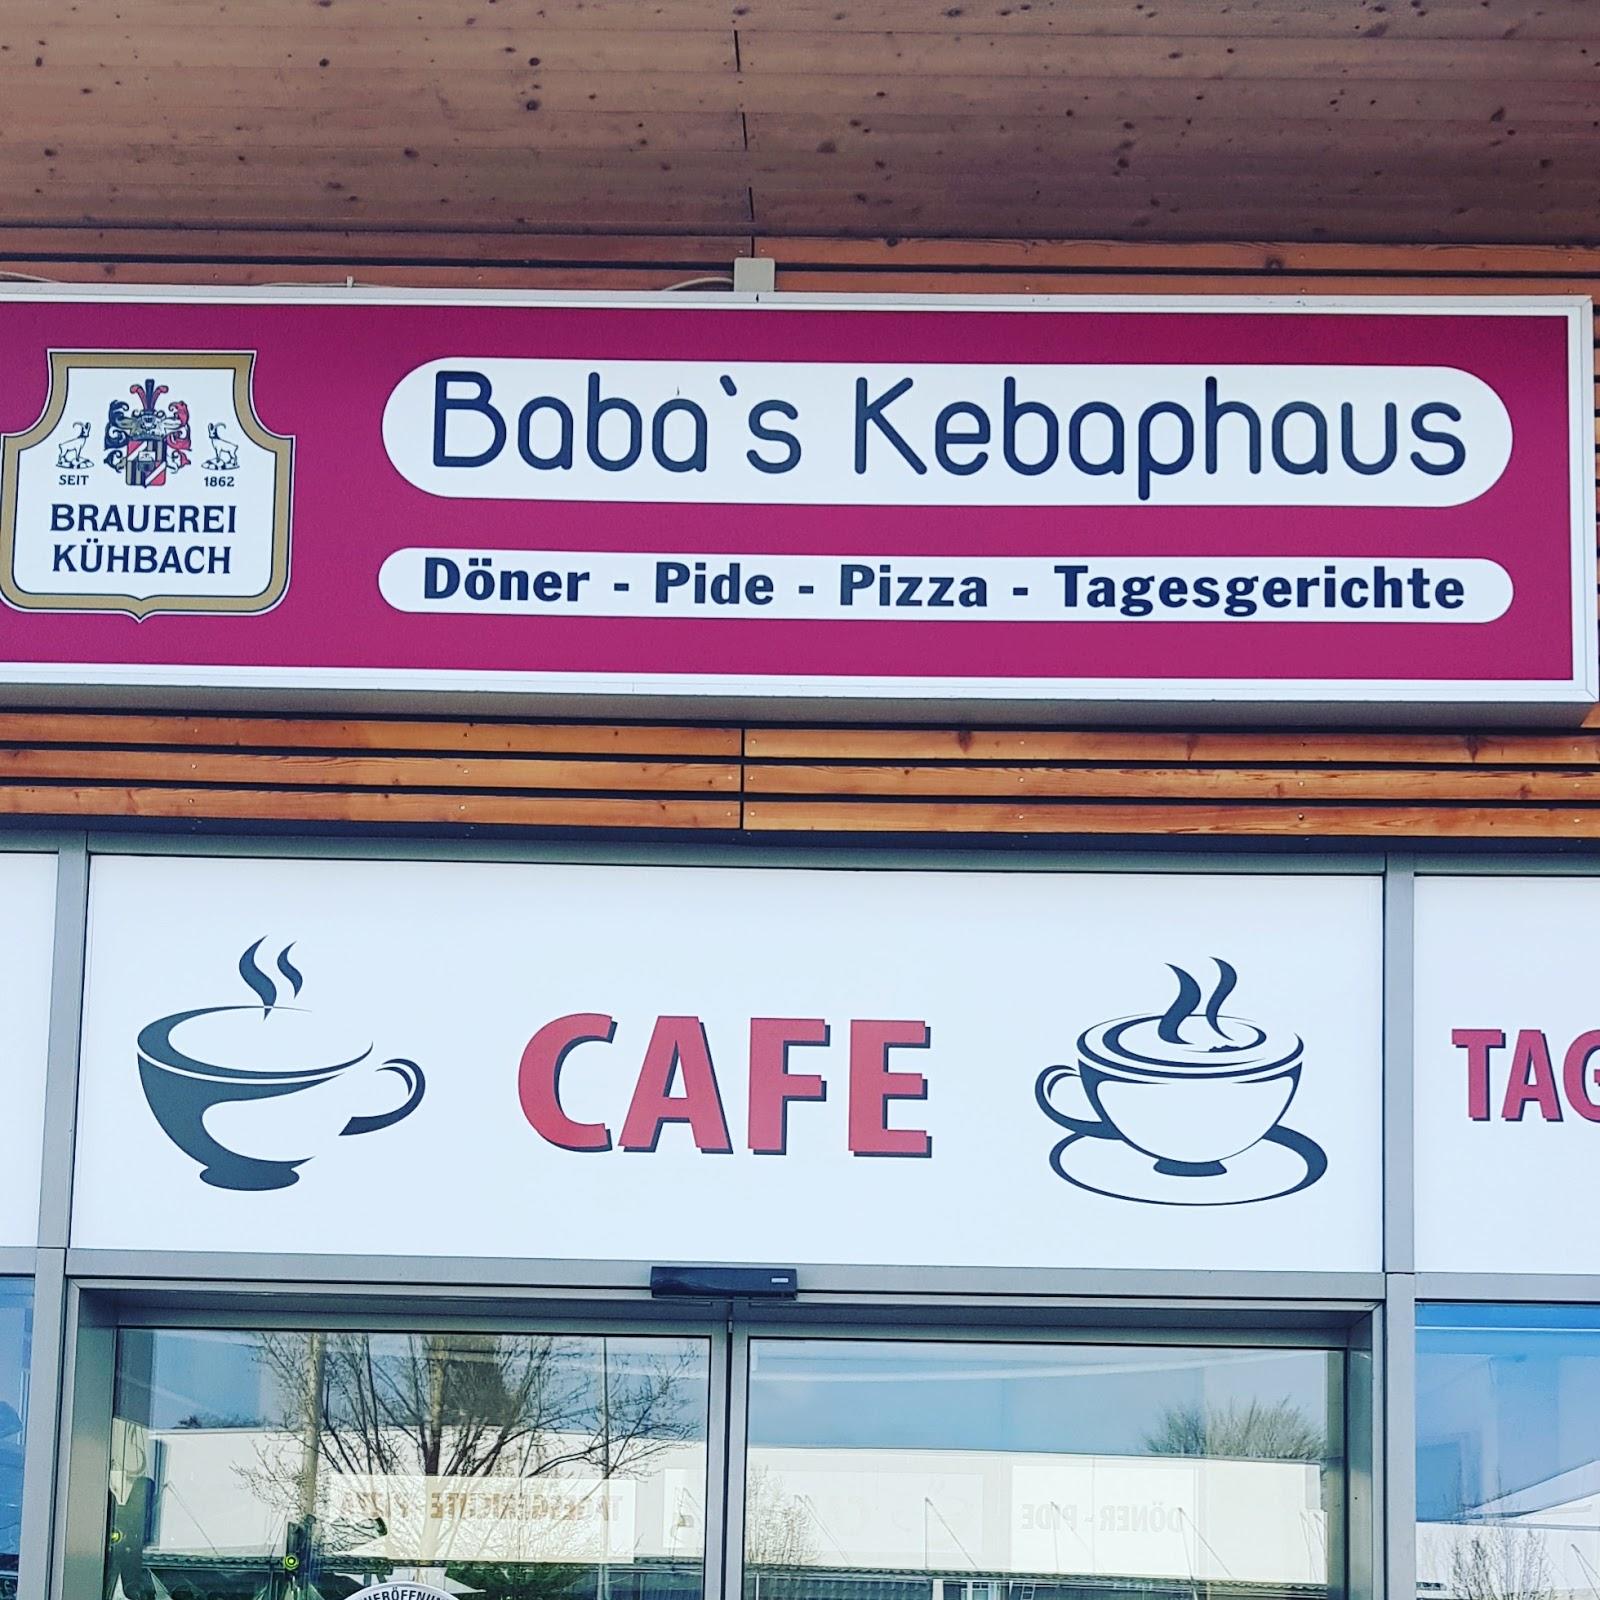 Restaurant "Babas kebabhause" in  Aichach